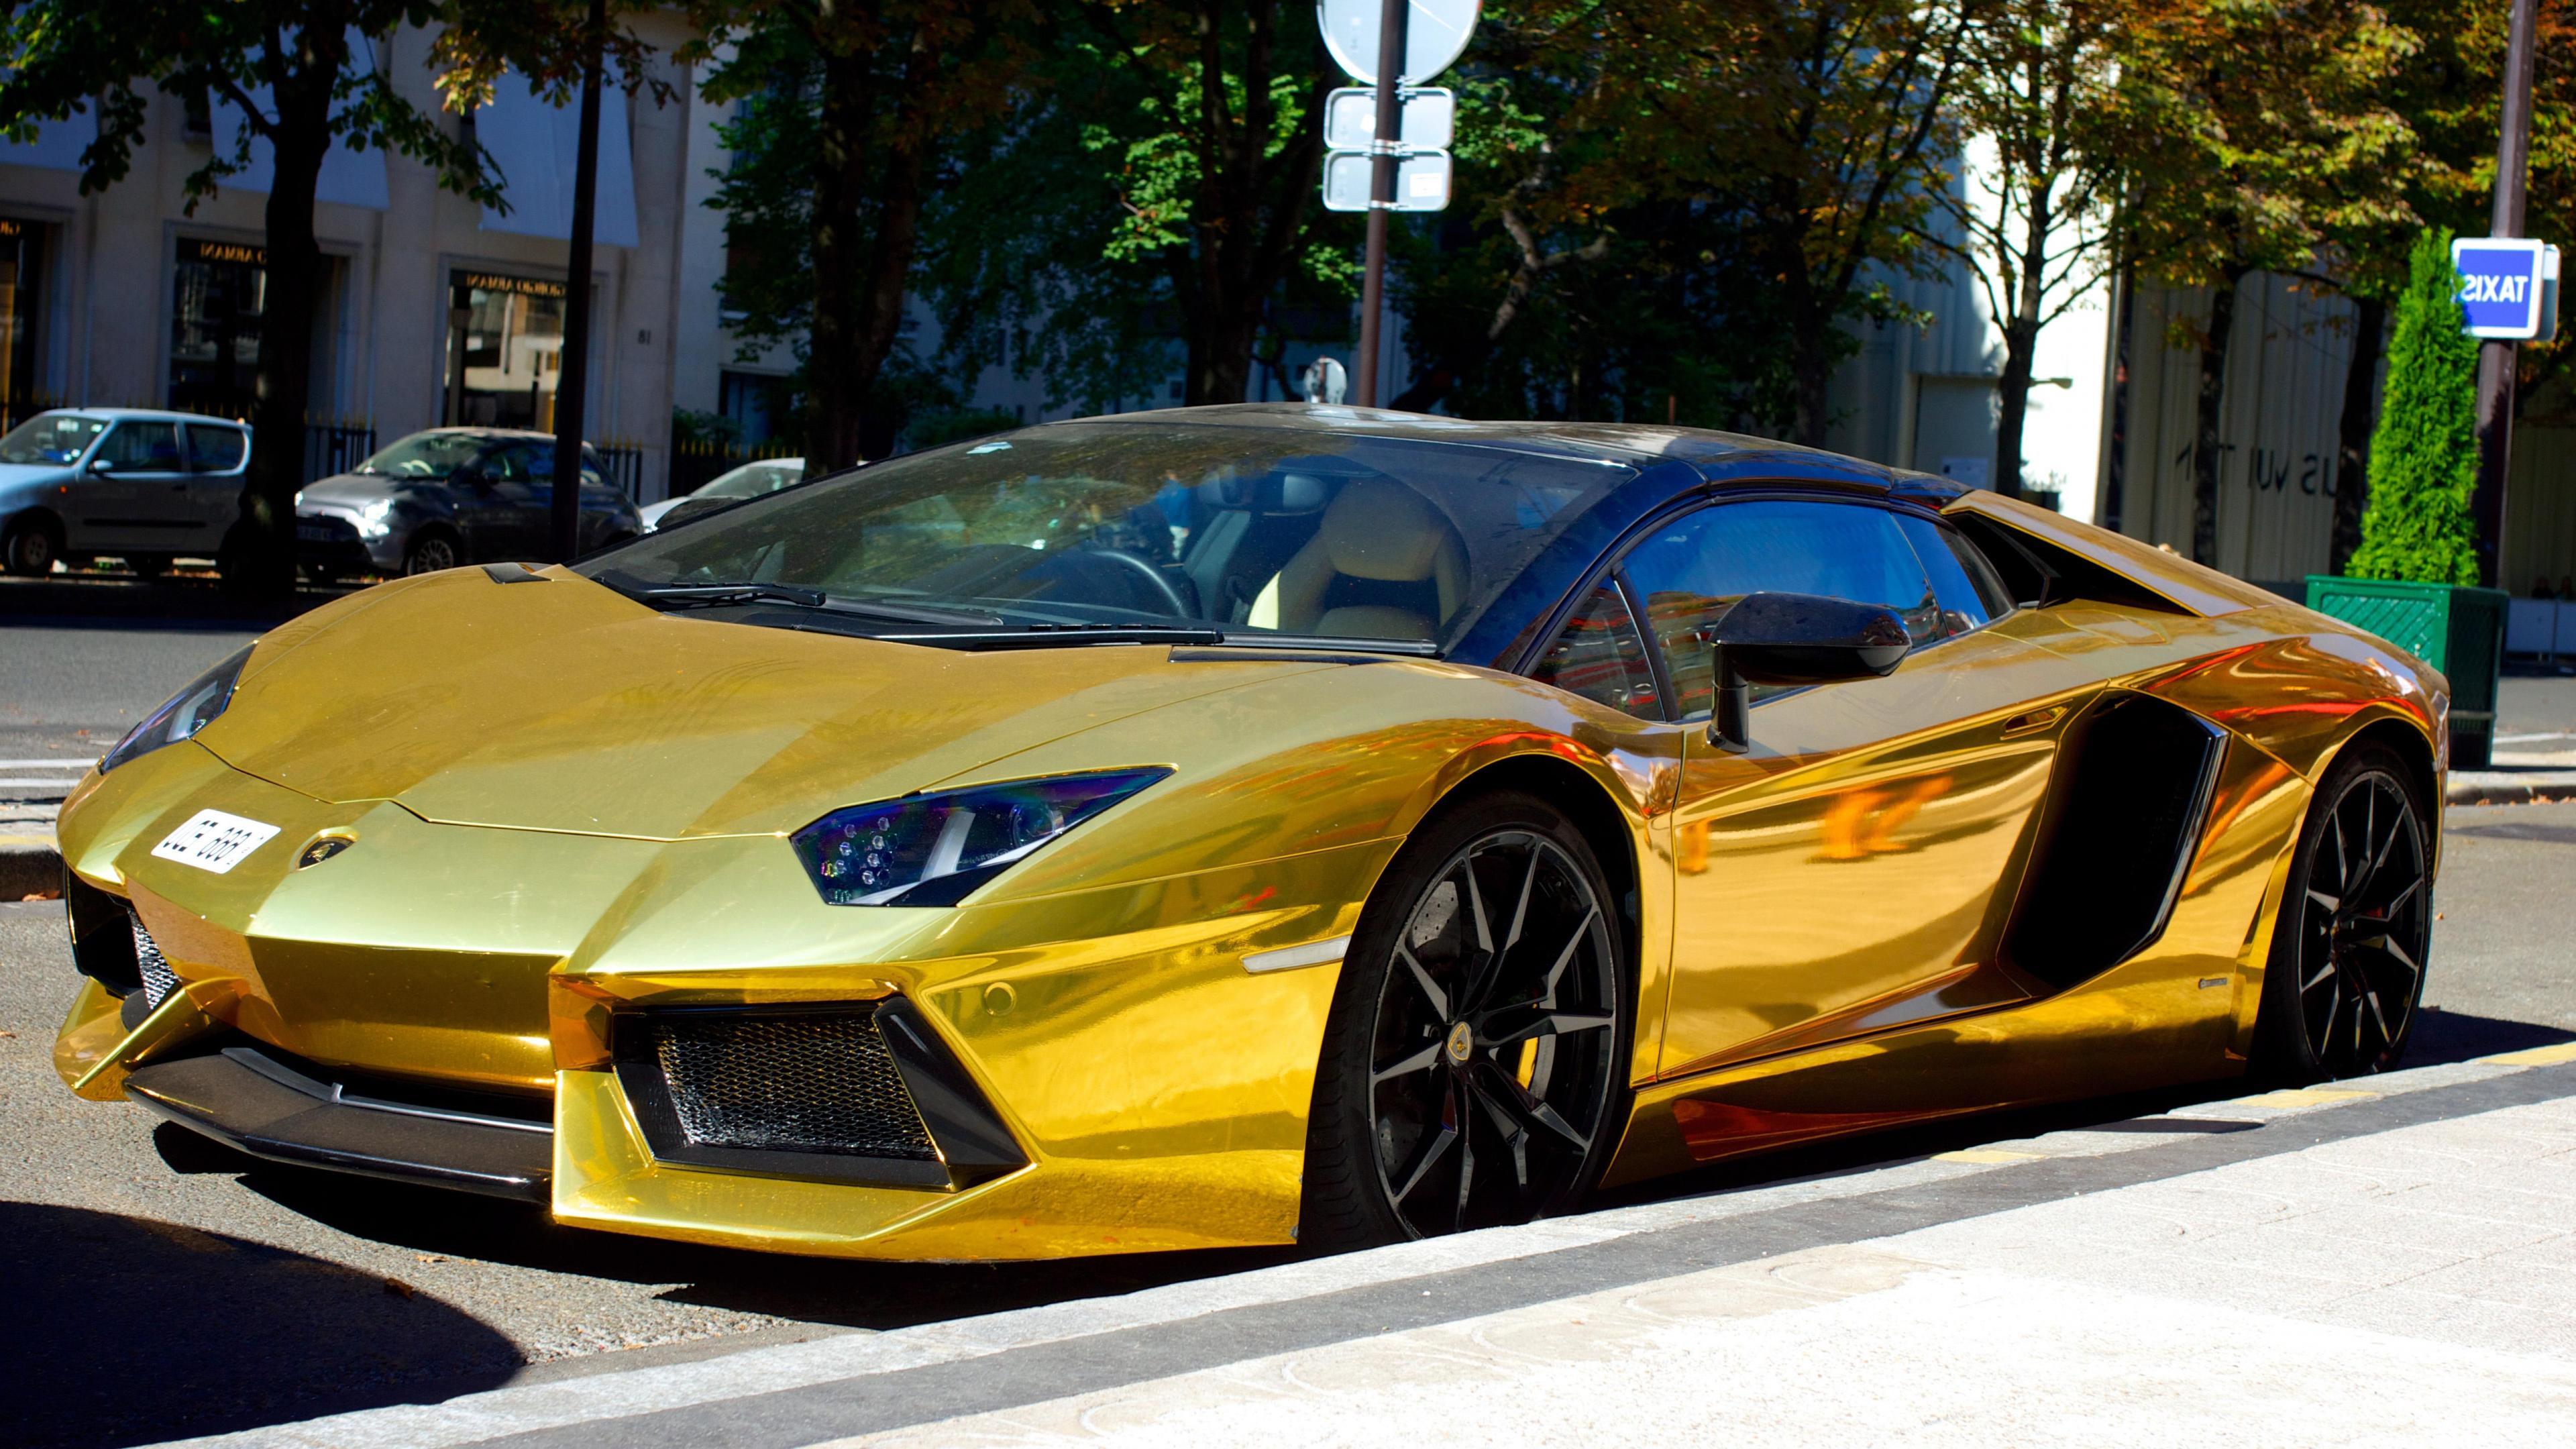 Gold Lamborghini Wallpapers - Top Free Gold Lamborghini Backgrounds